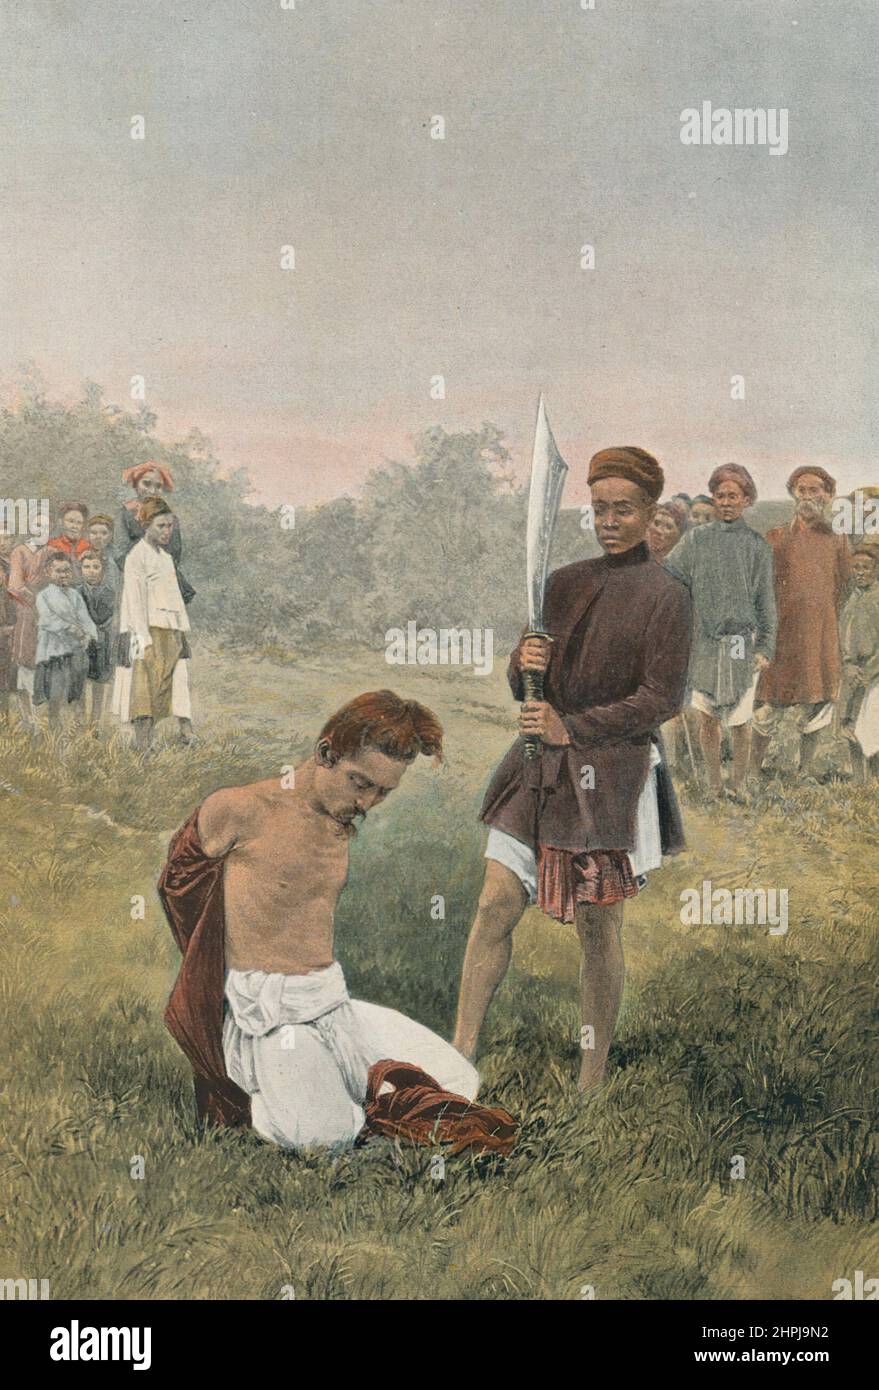 Execution capitale - Autour Du Monde Tonkin  - Vietnam II 1895 - 1900  (8a )  - 19 th century french colored photography print Stock Photo